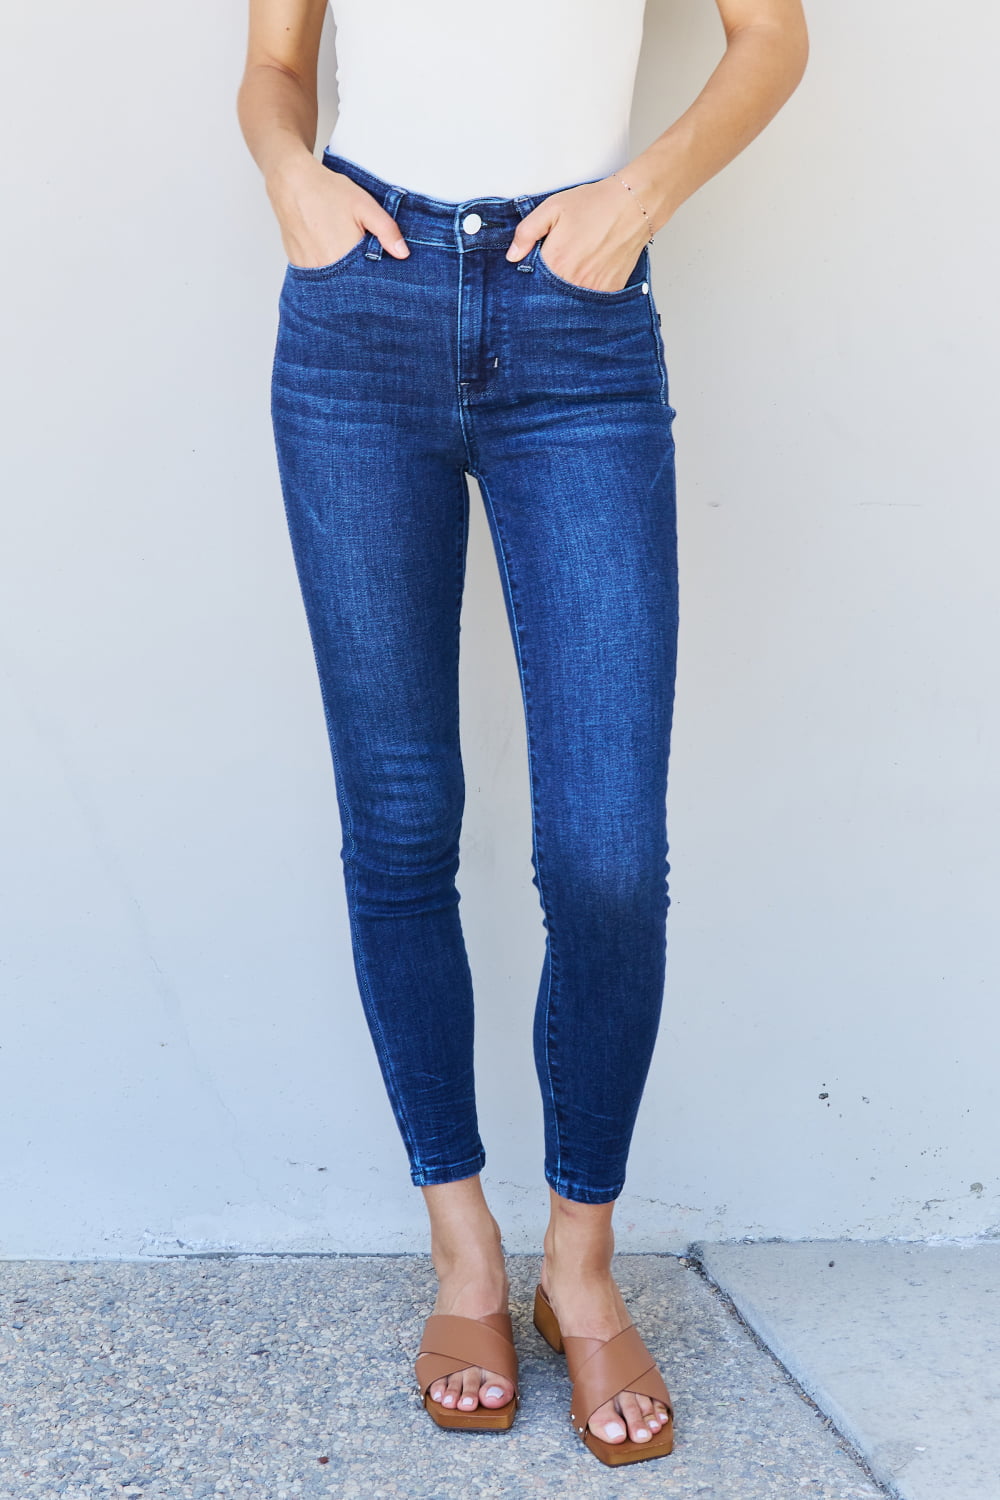 Judy Blue Marcielle Mid Rise Crinkle Ankle Skinny Jeans Pants RYSE Clothing Co. Medium 0(24) 